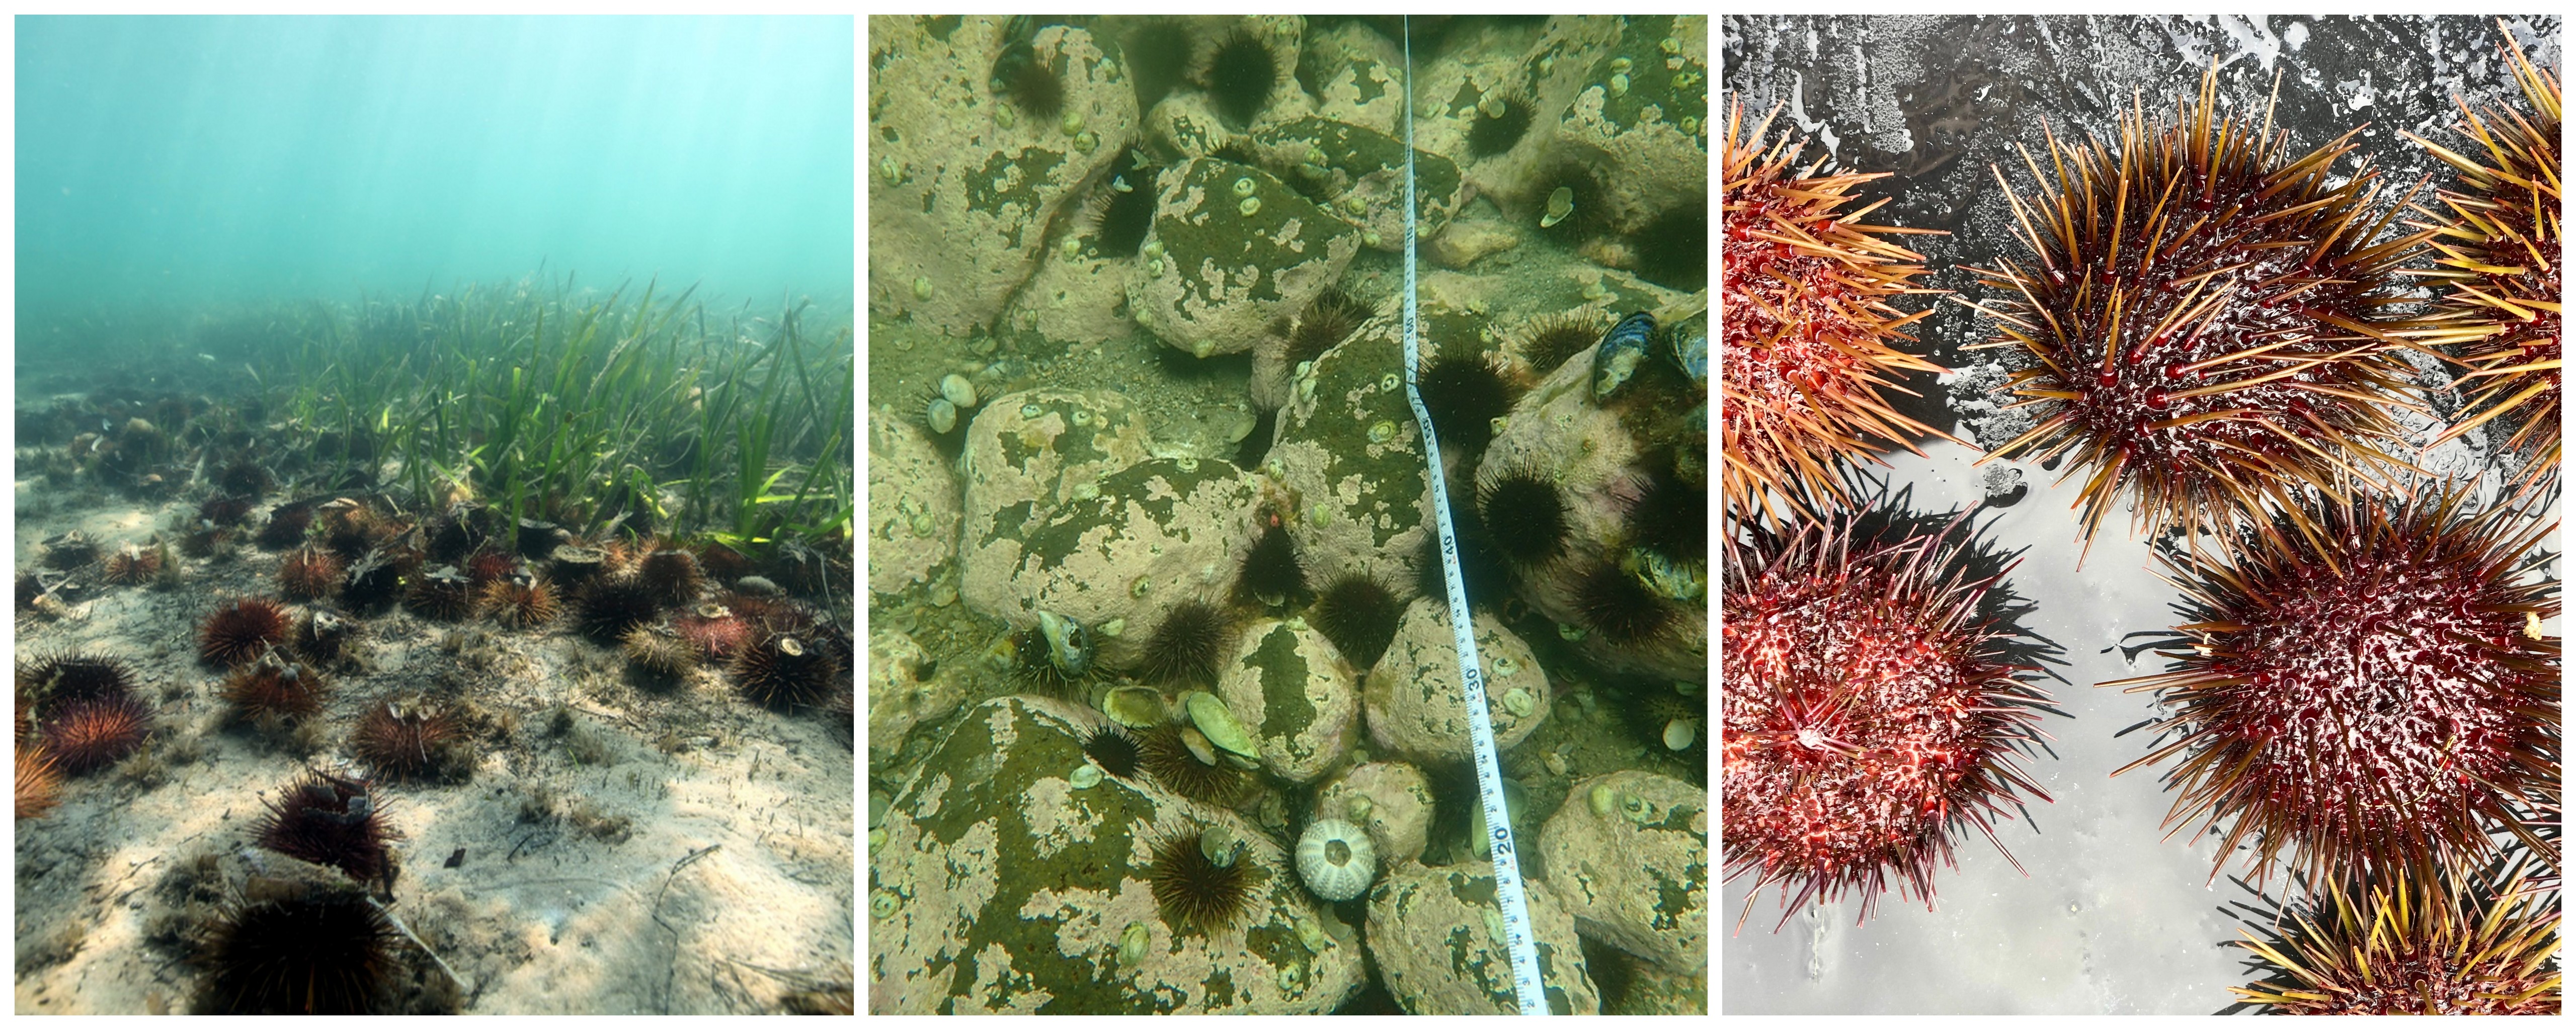 Seagrass & Kelp restoration